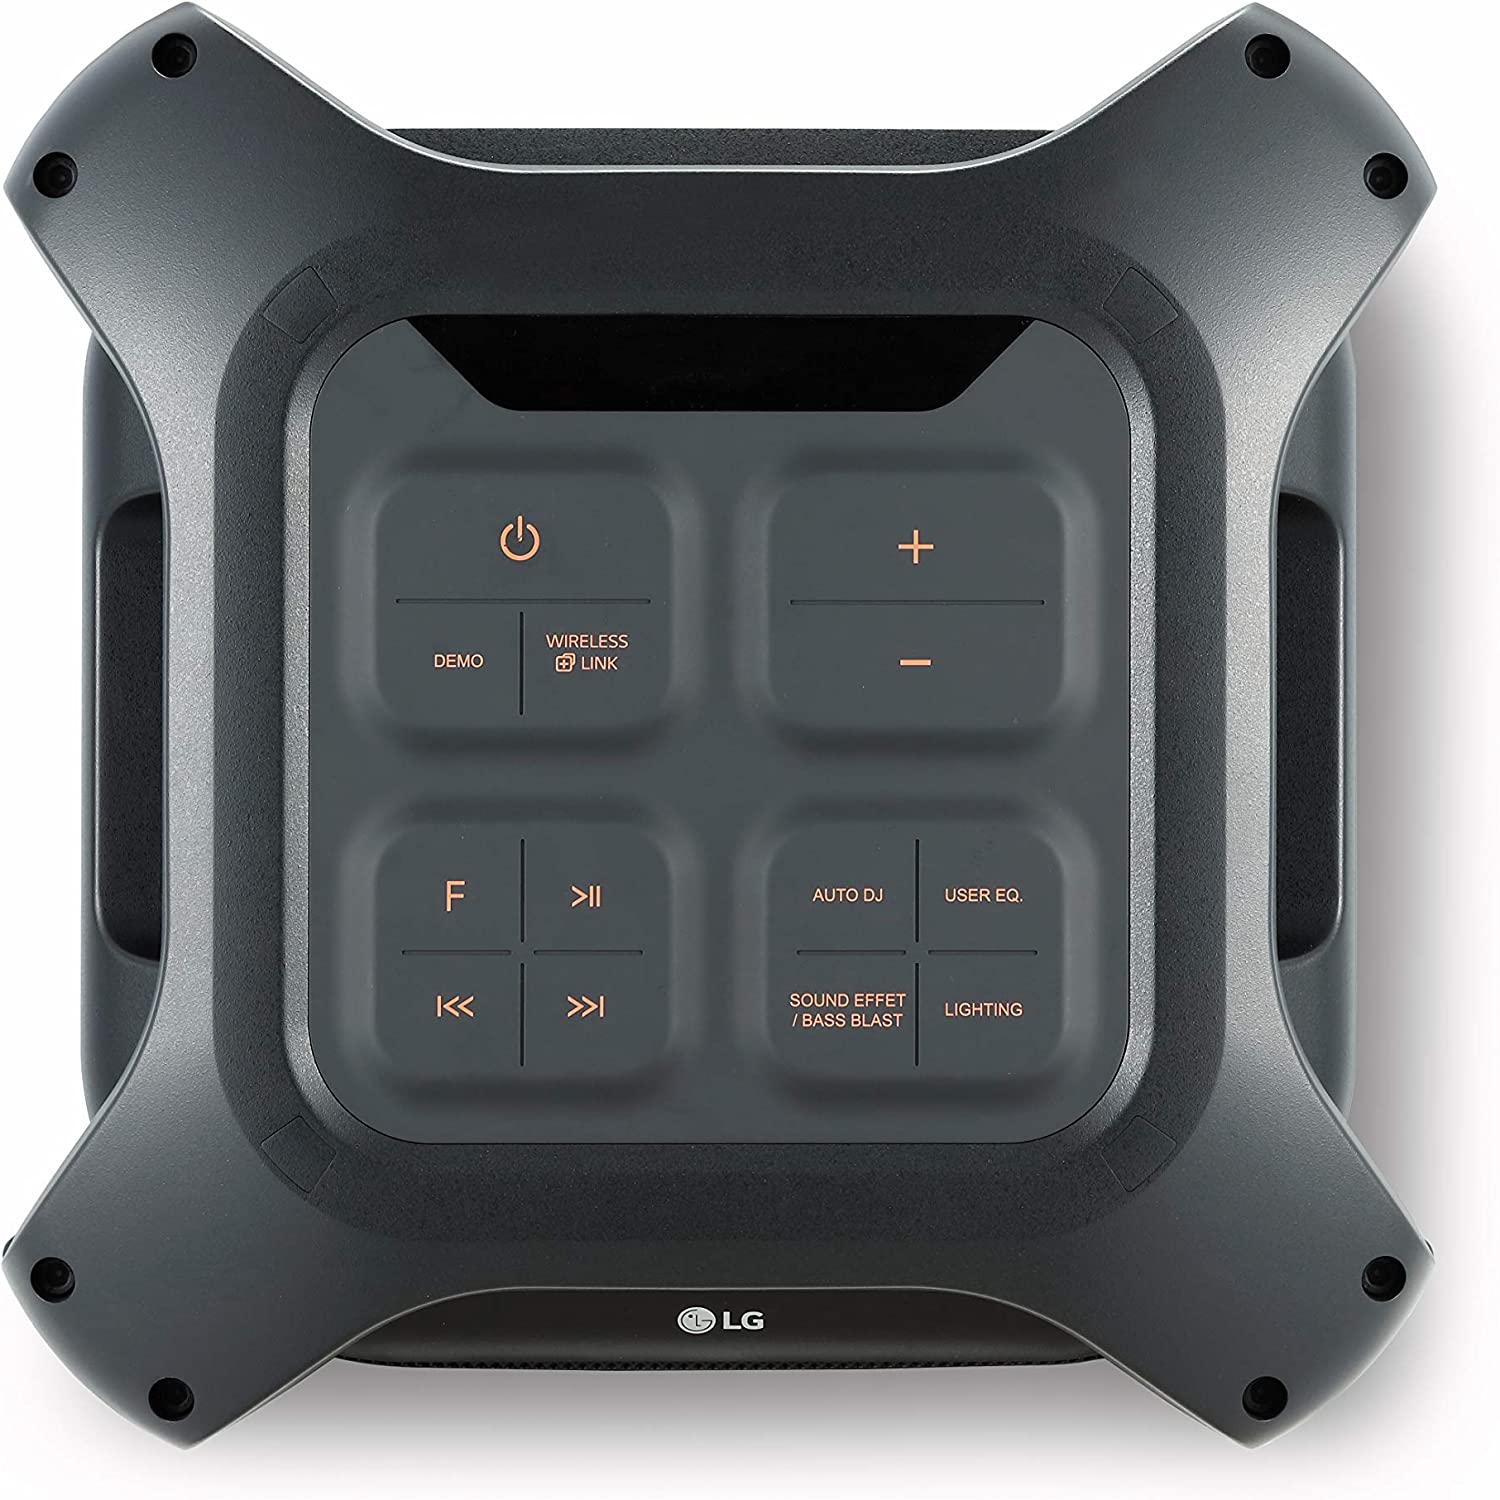 LG XBOOM RK7 Bluetooth Megasound Party Speaker 550 Watts